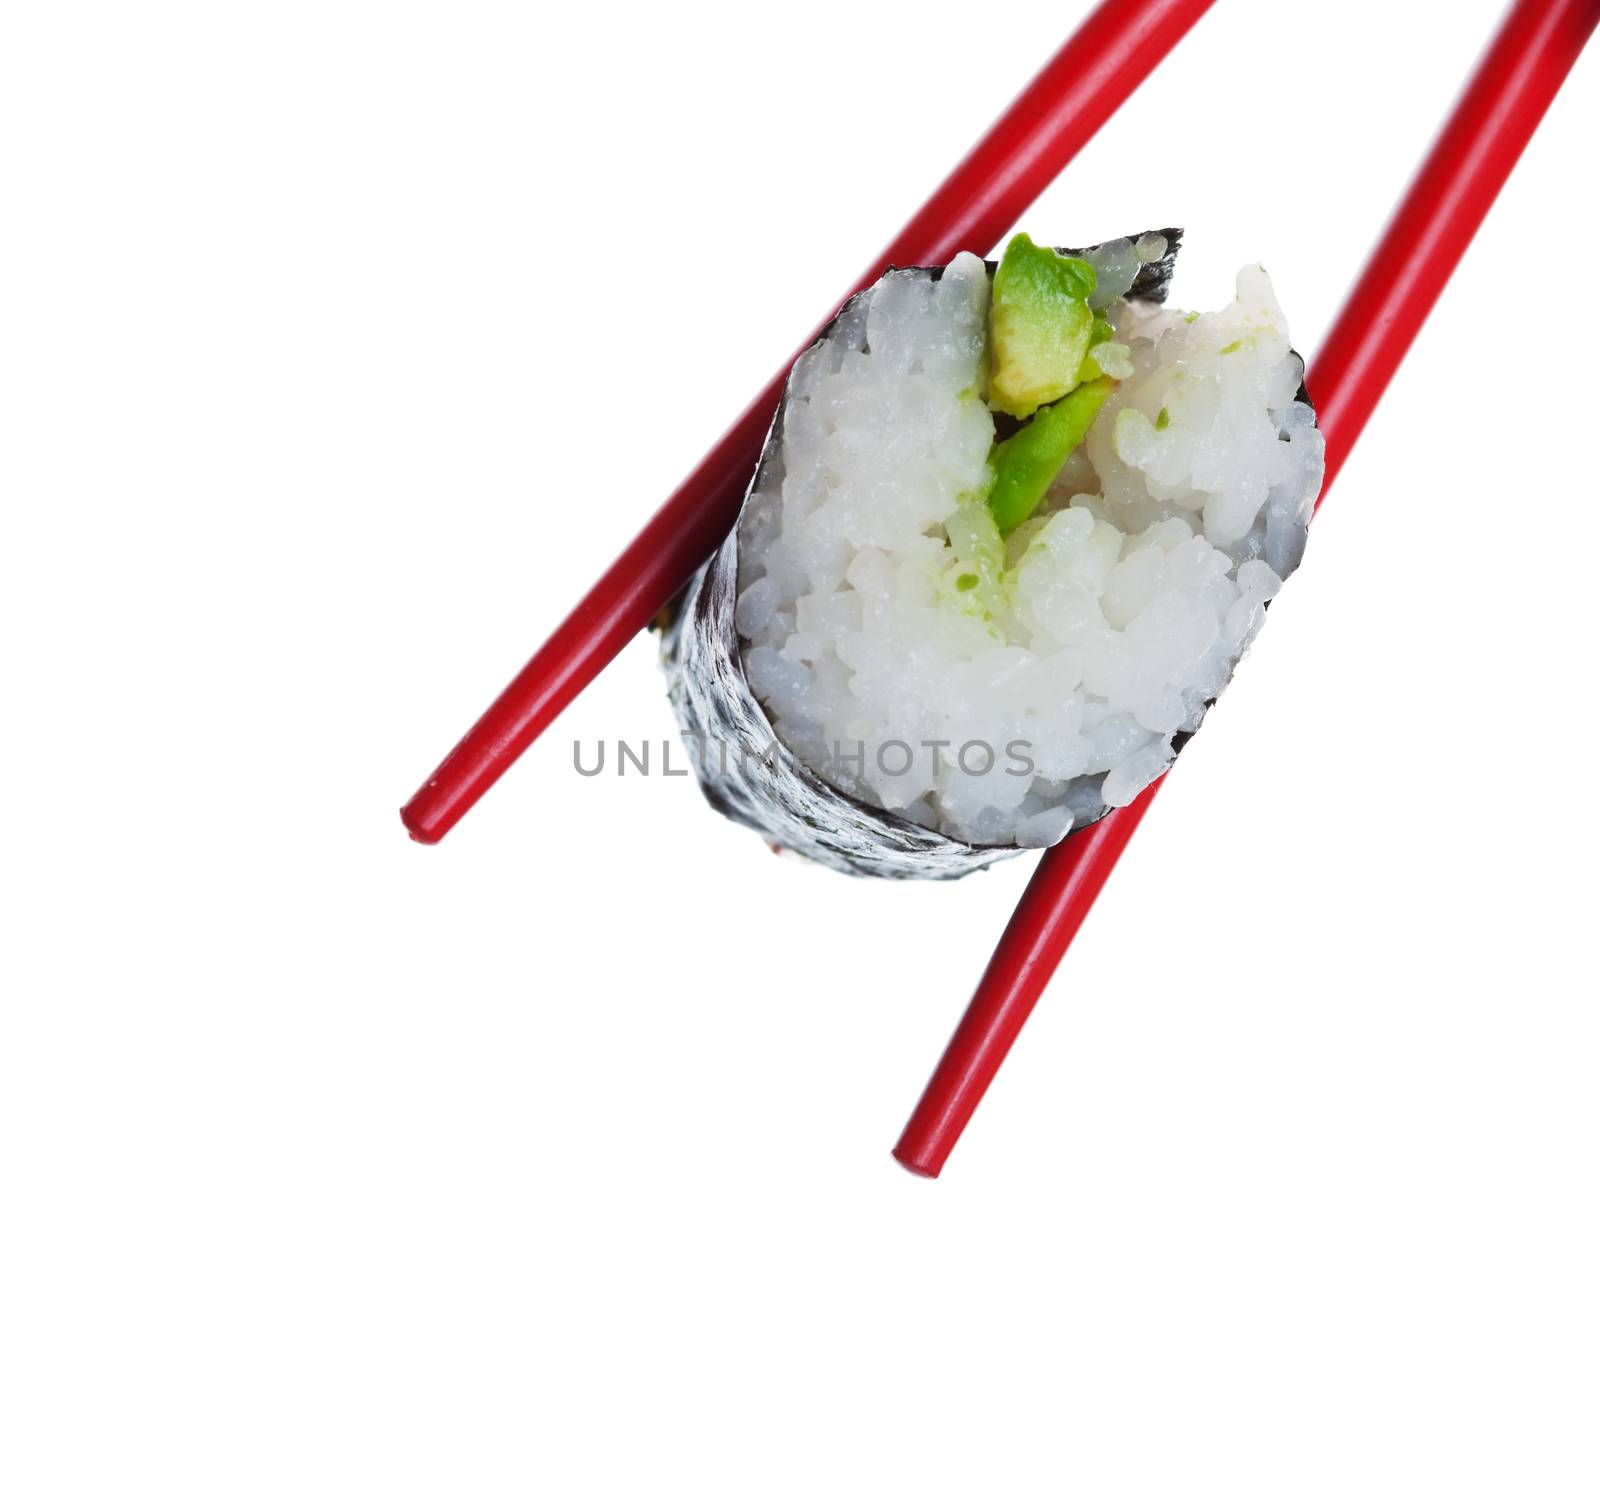 Red chopsticks holding a fresh avocado sushi roll.  Shot on White Background.